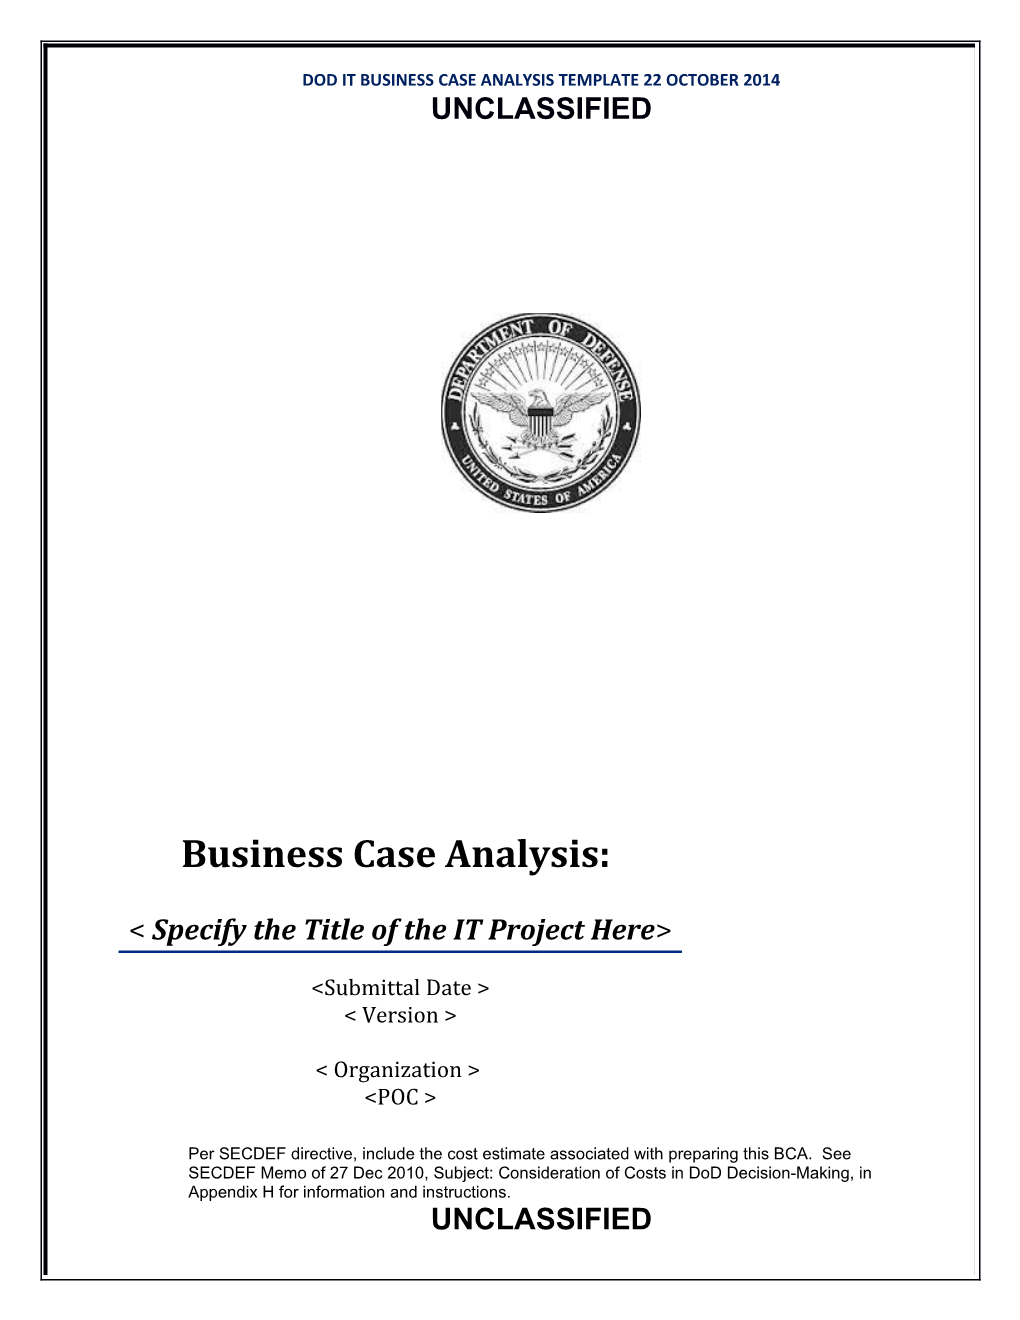 Dod Enterprise It Business Case Analysis Template